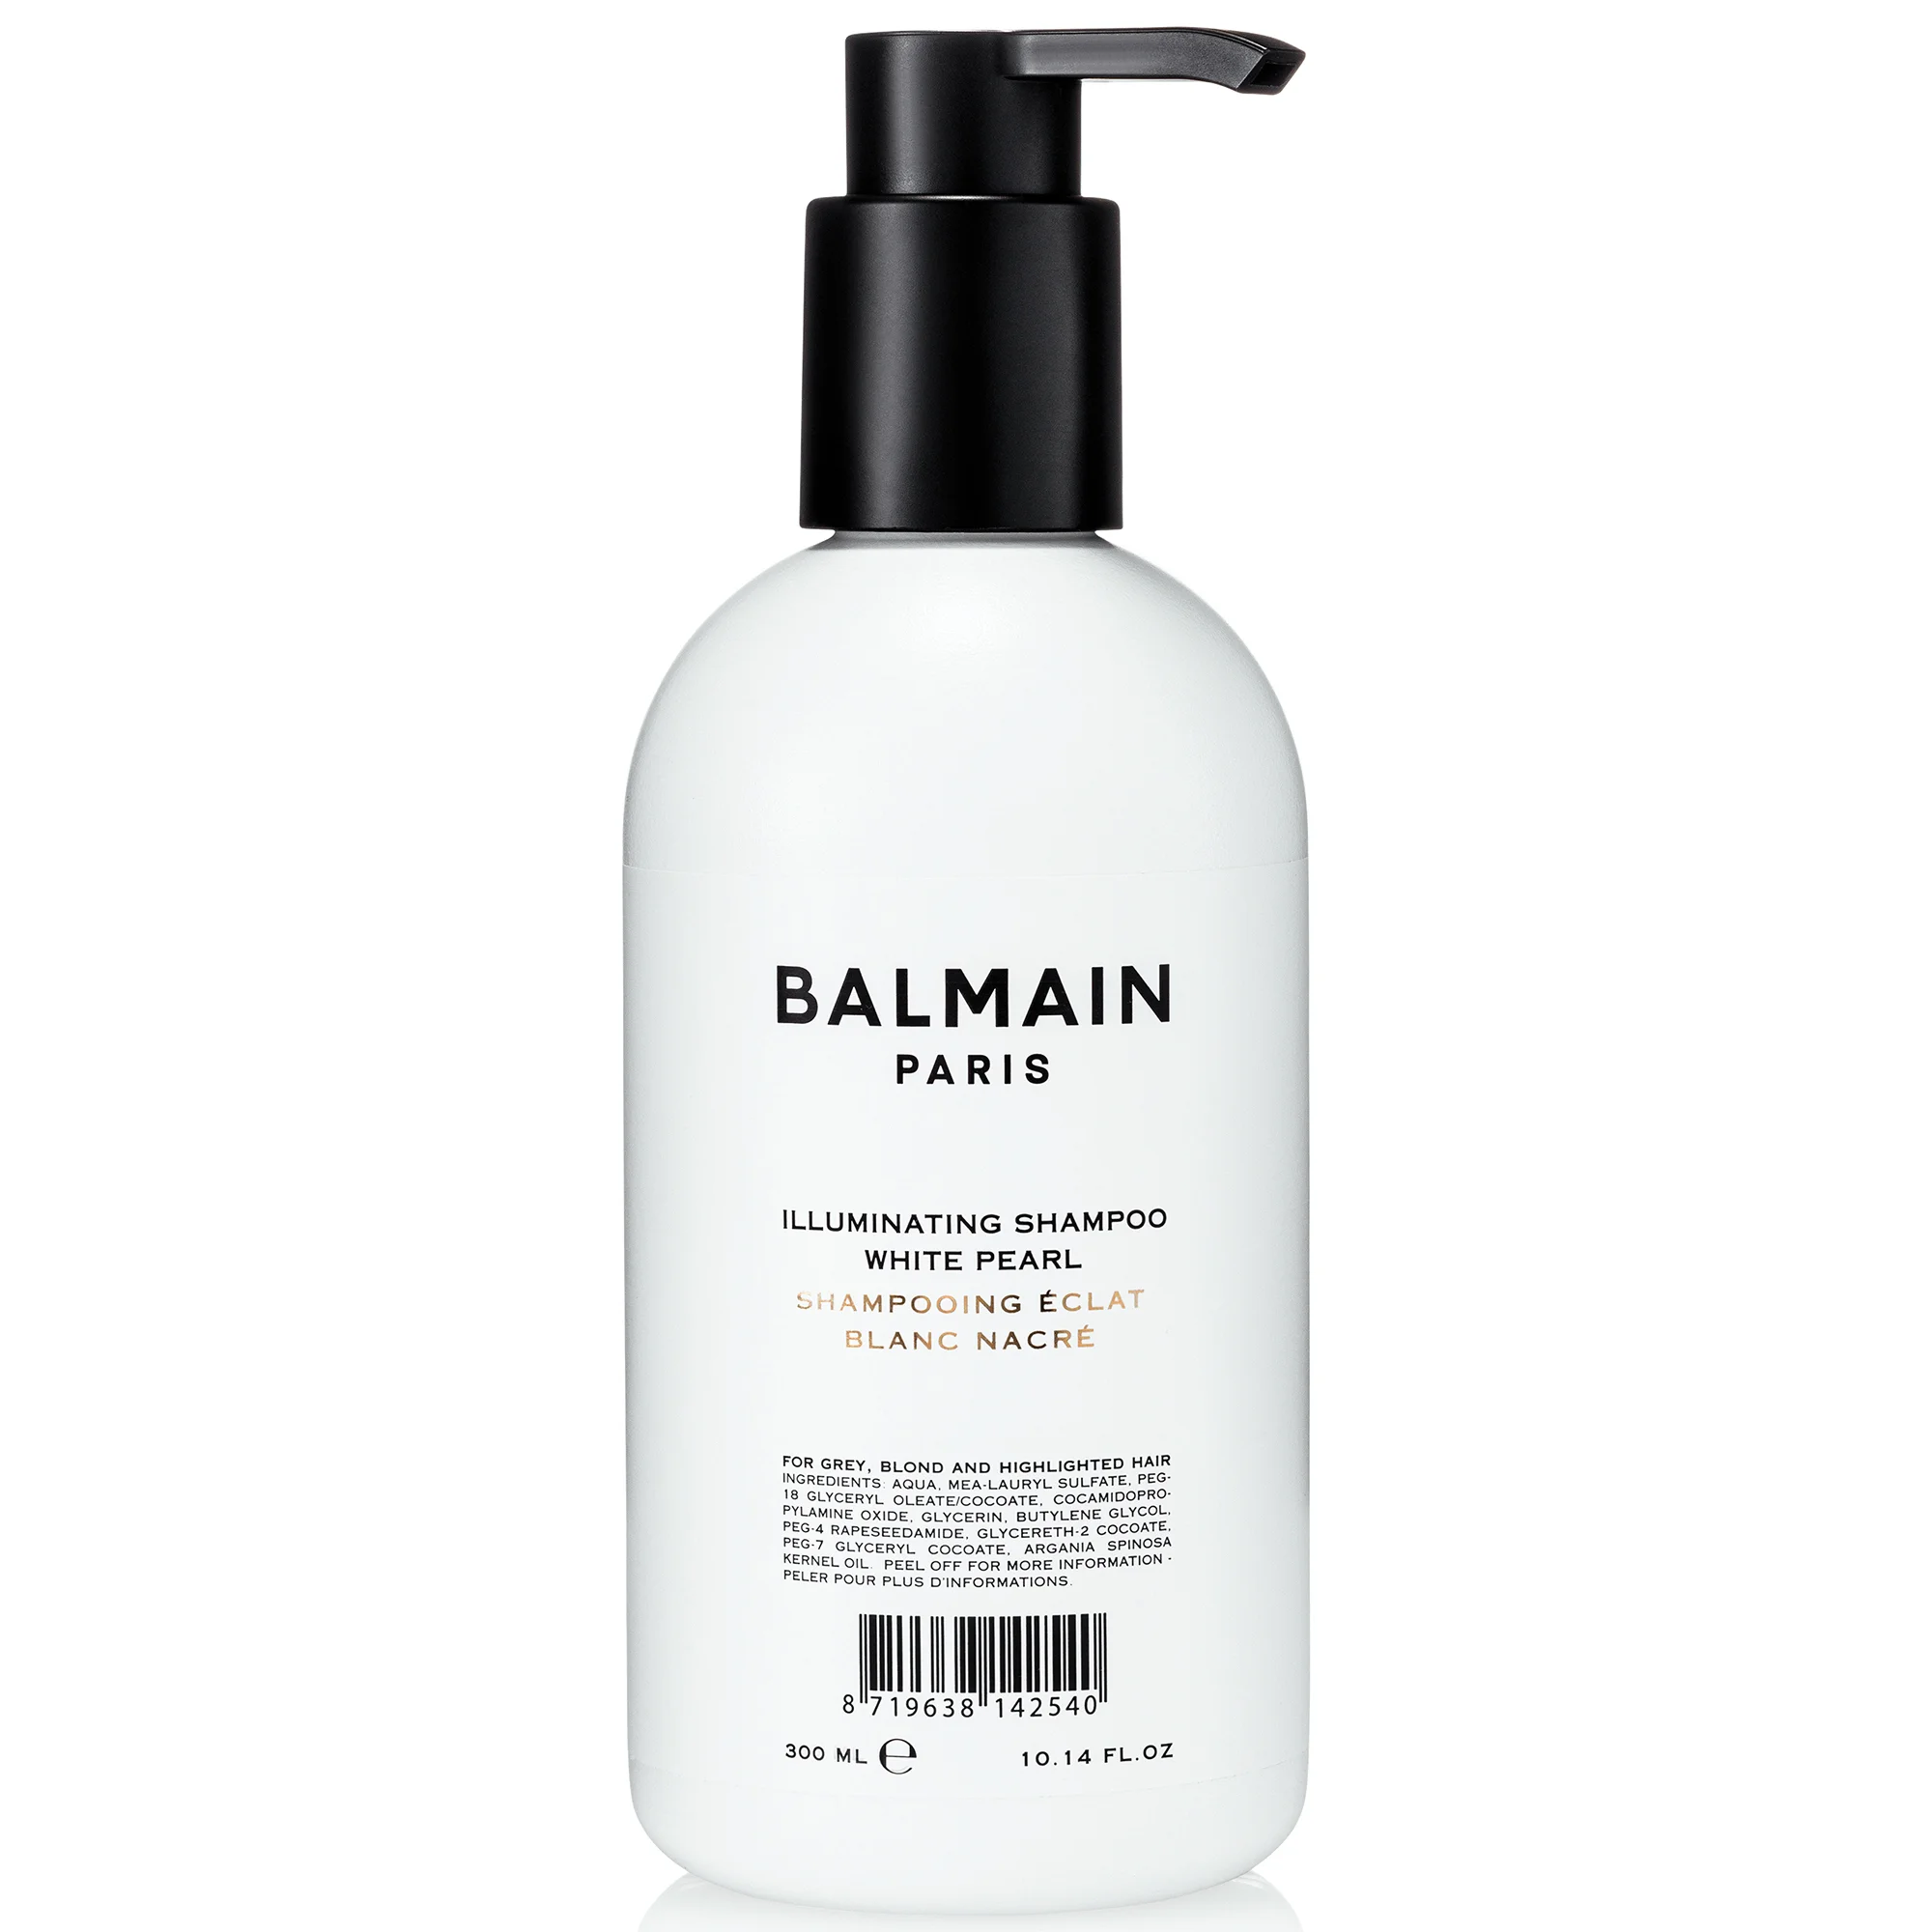 Balmain Hair Illuminating Shampoo - White Pearl 300ml Image 1